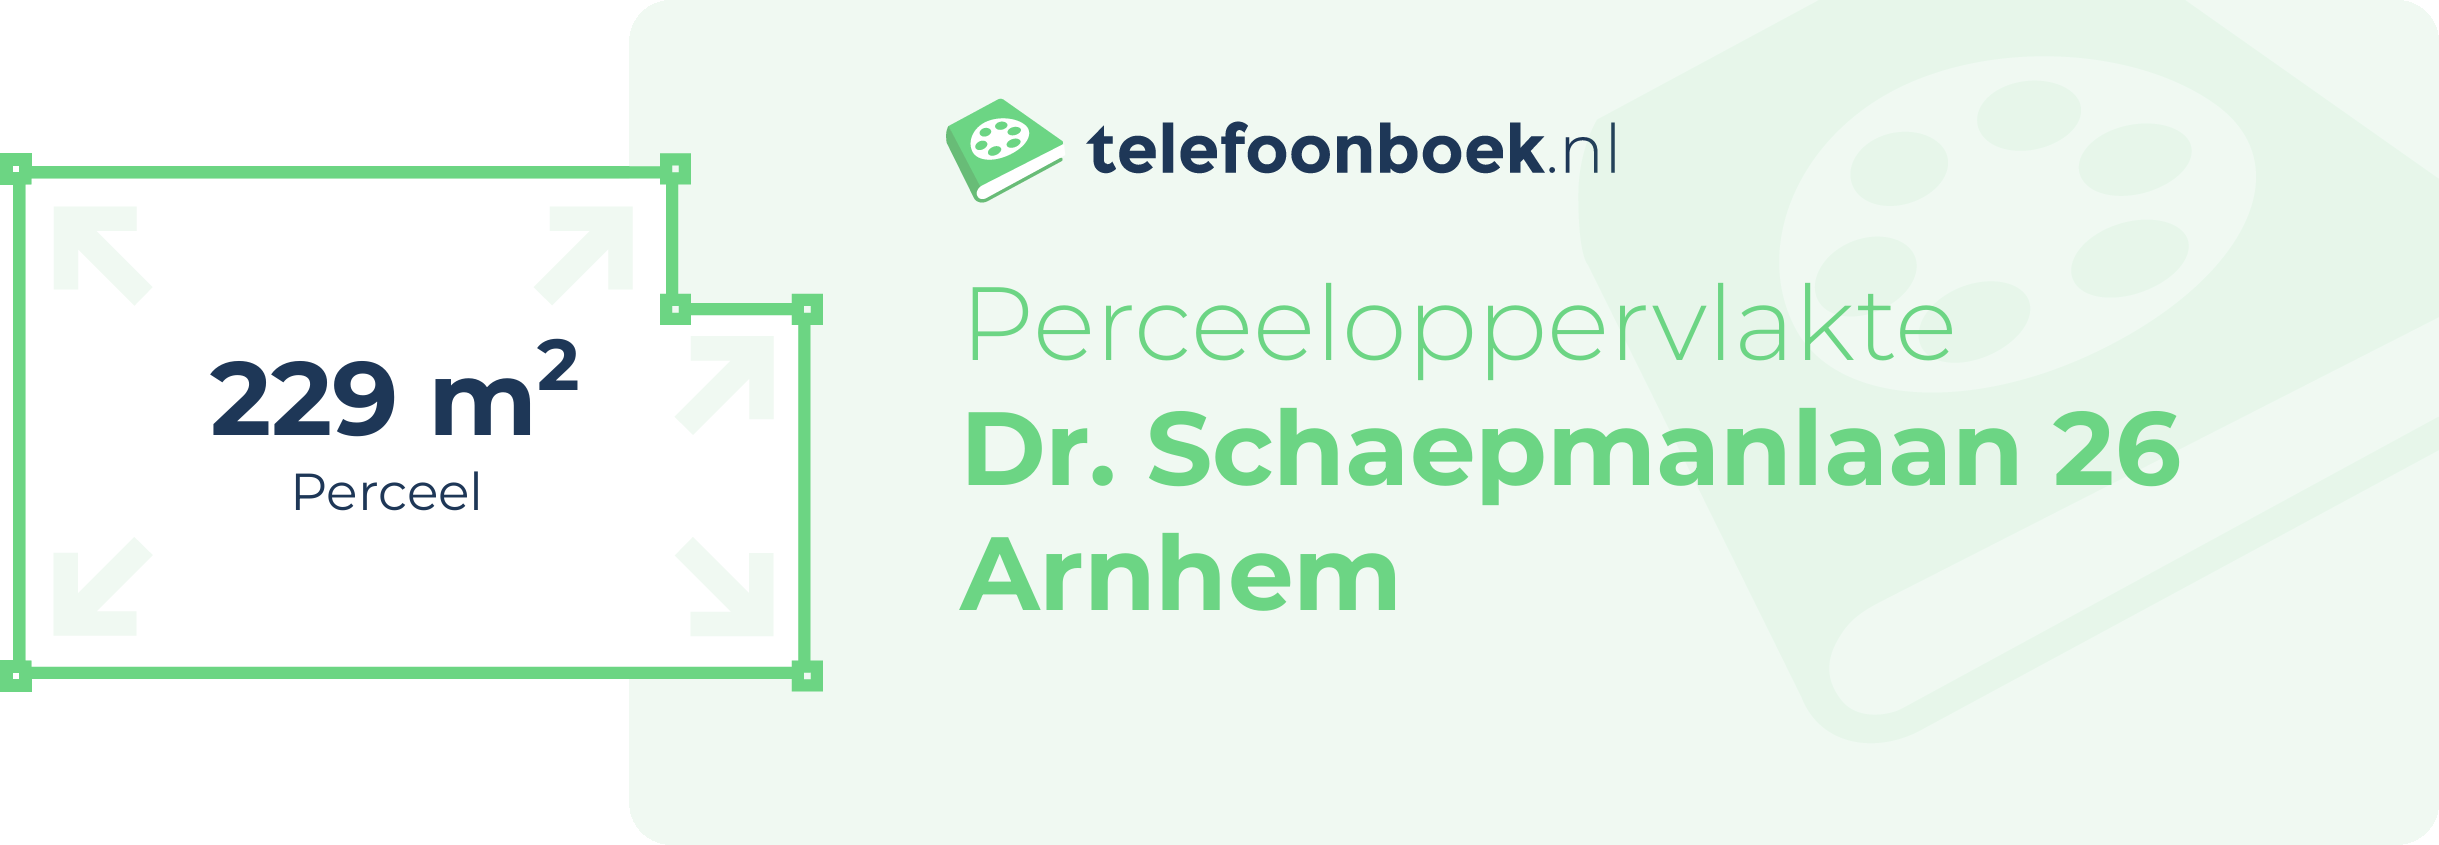 Perceeloppervlakte Dr. Schaepmanlaan 26 Arnhem